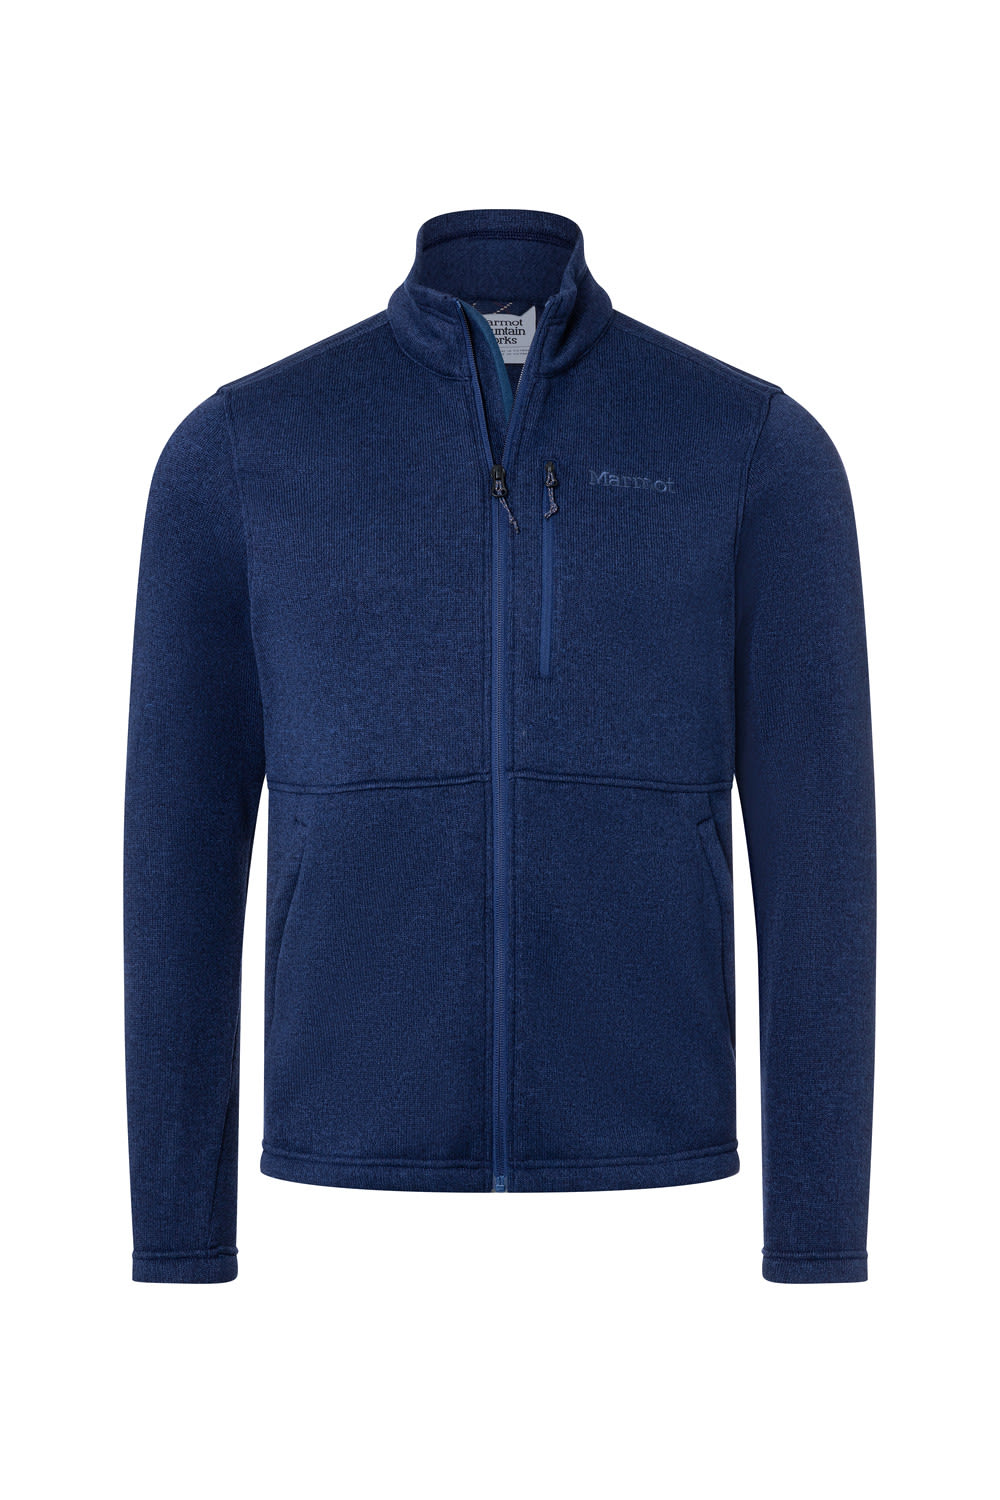 Marmot M Drop Line Jacket Blau | Größe XXL | Herren Anorak